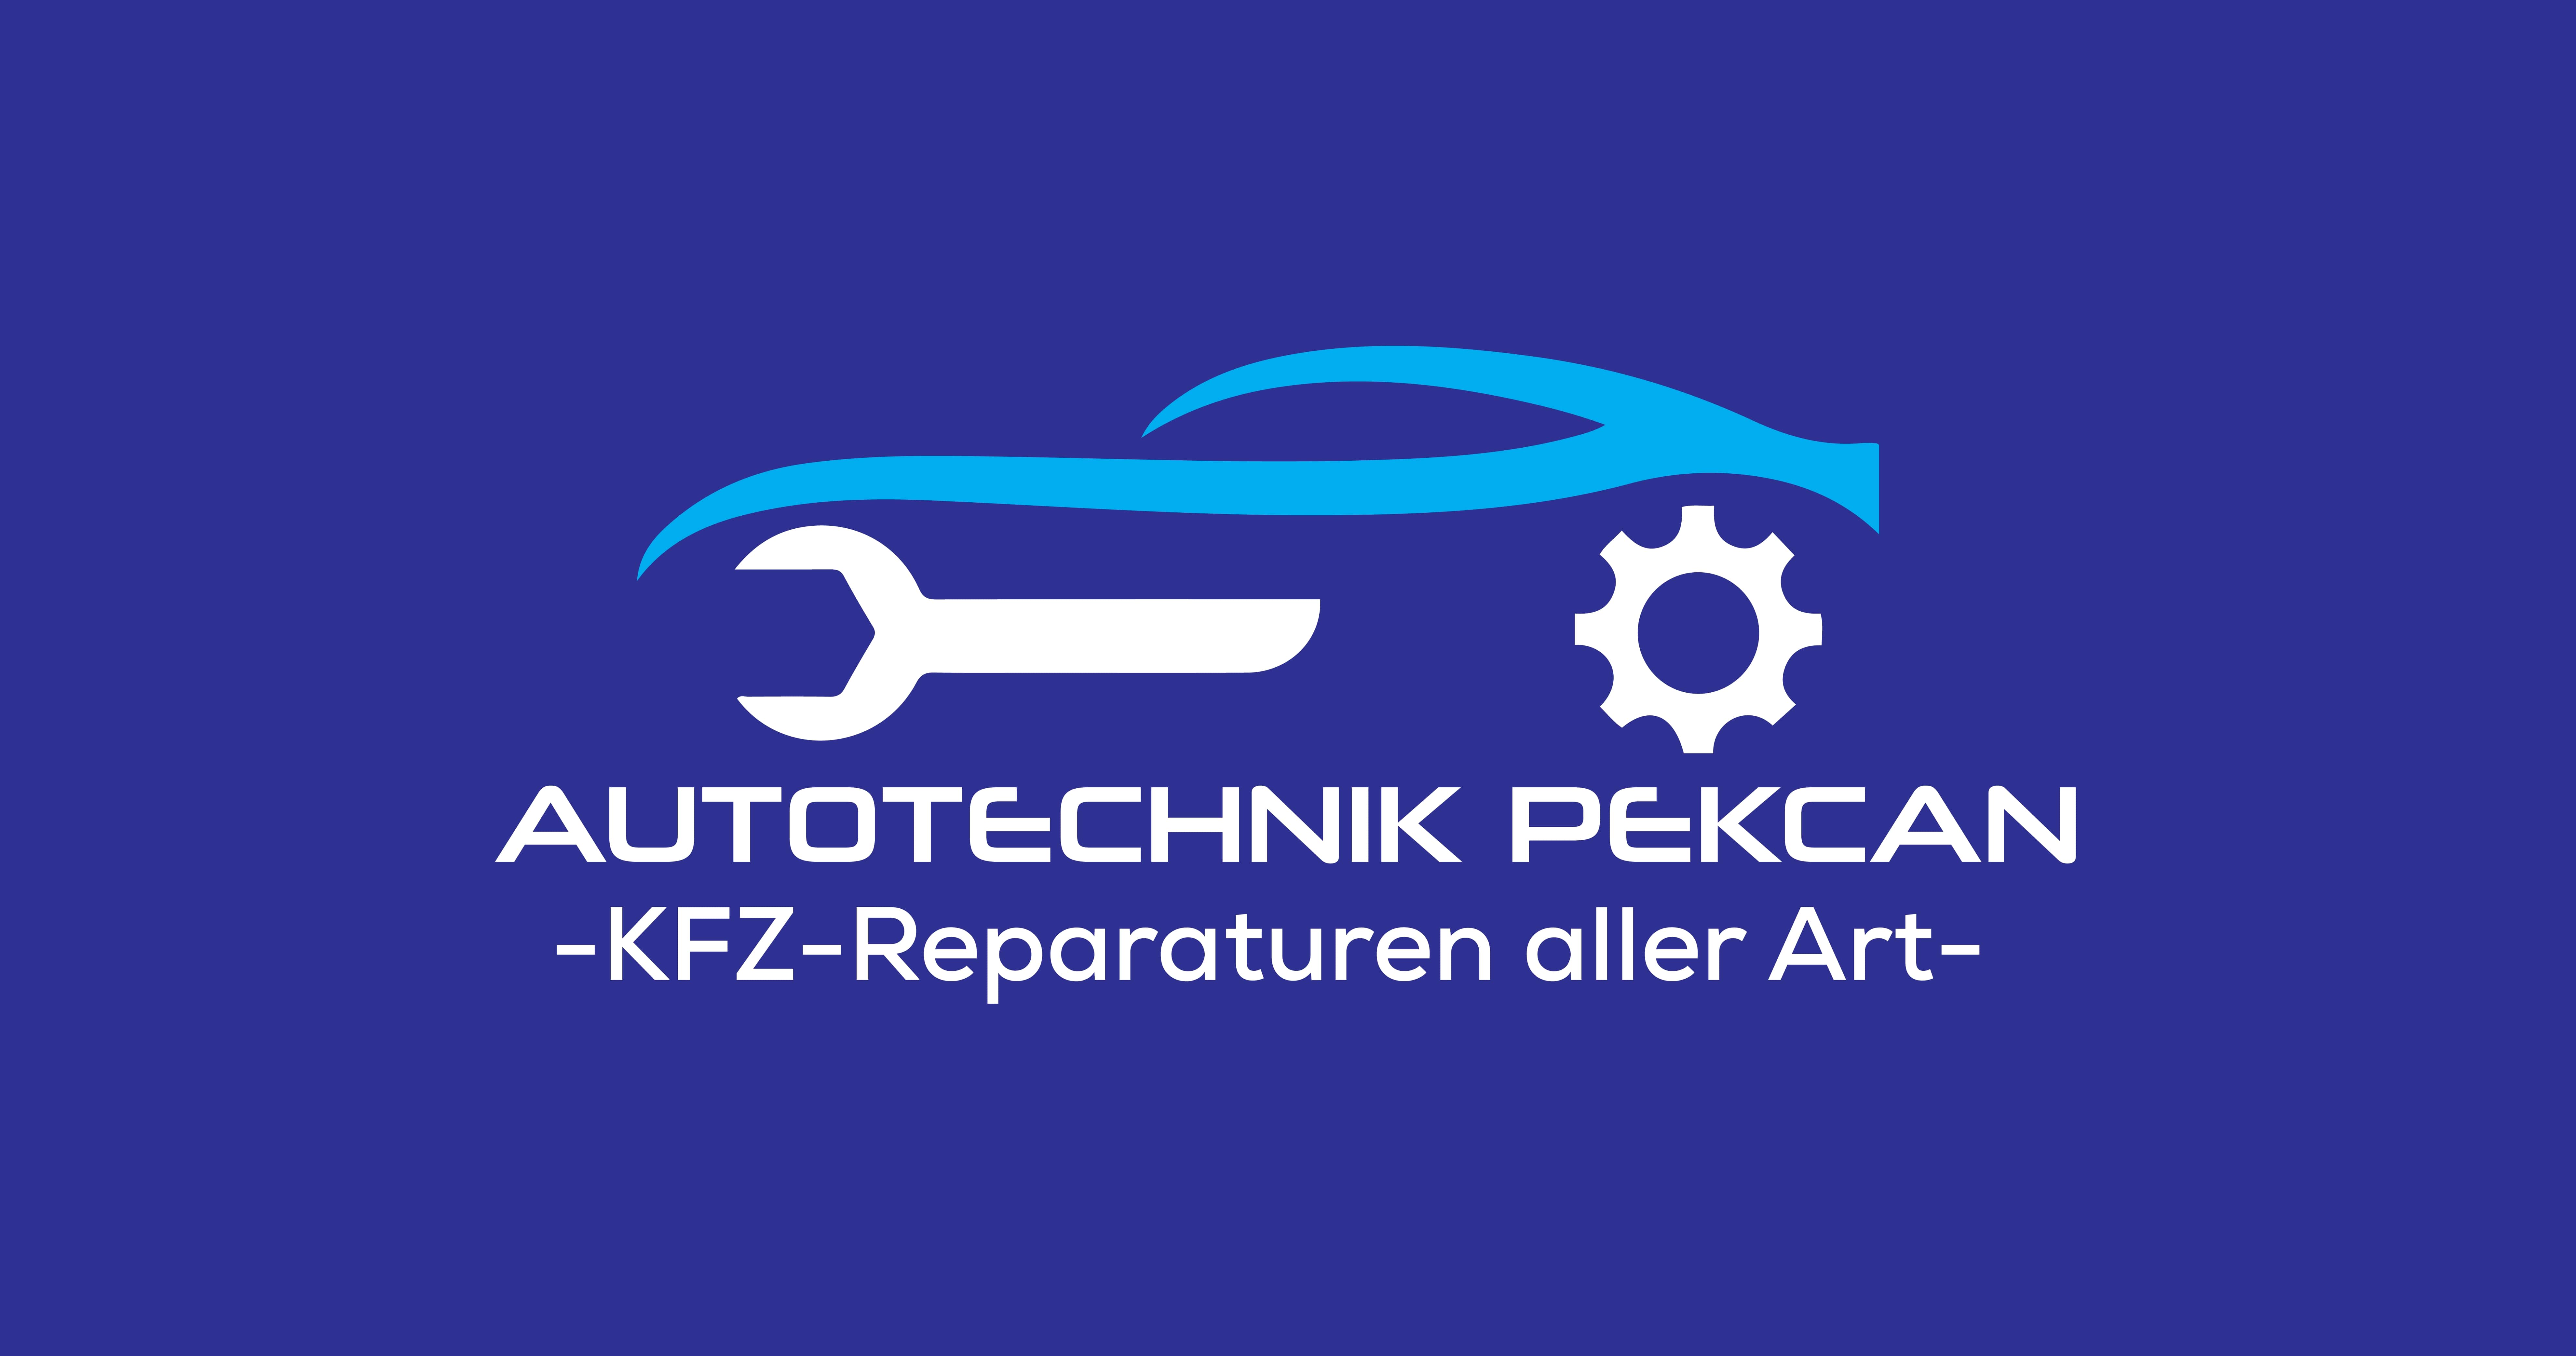 Autotechnik Pekcan